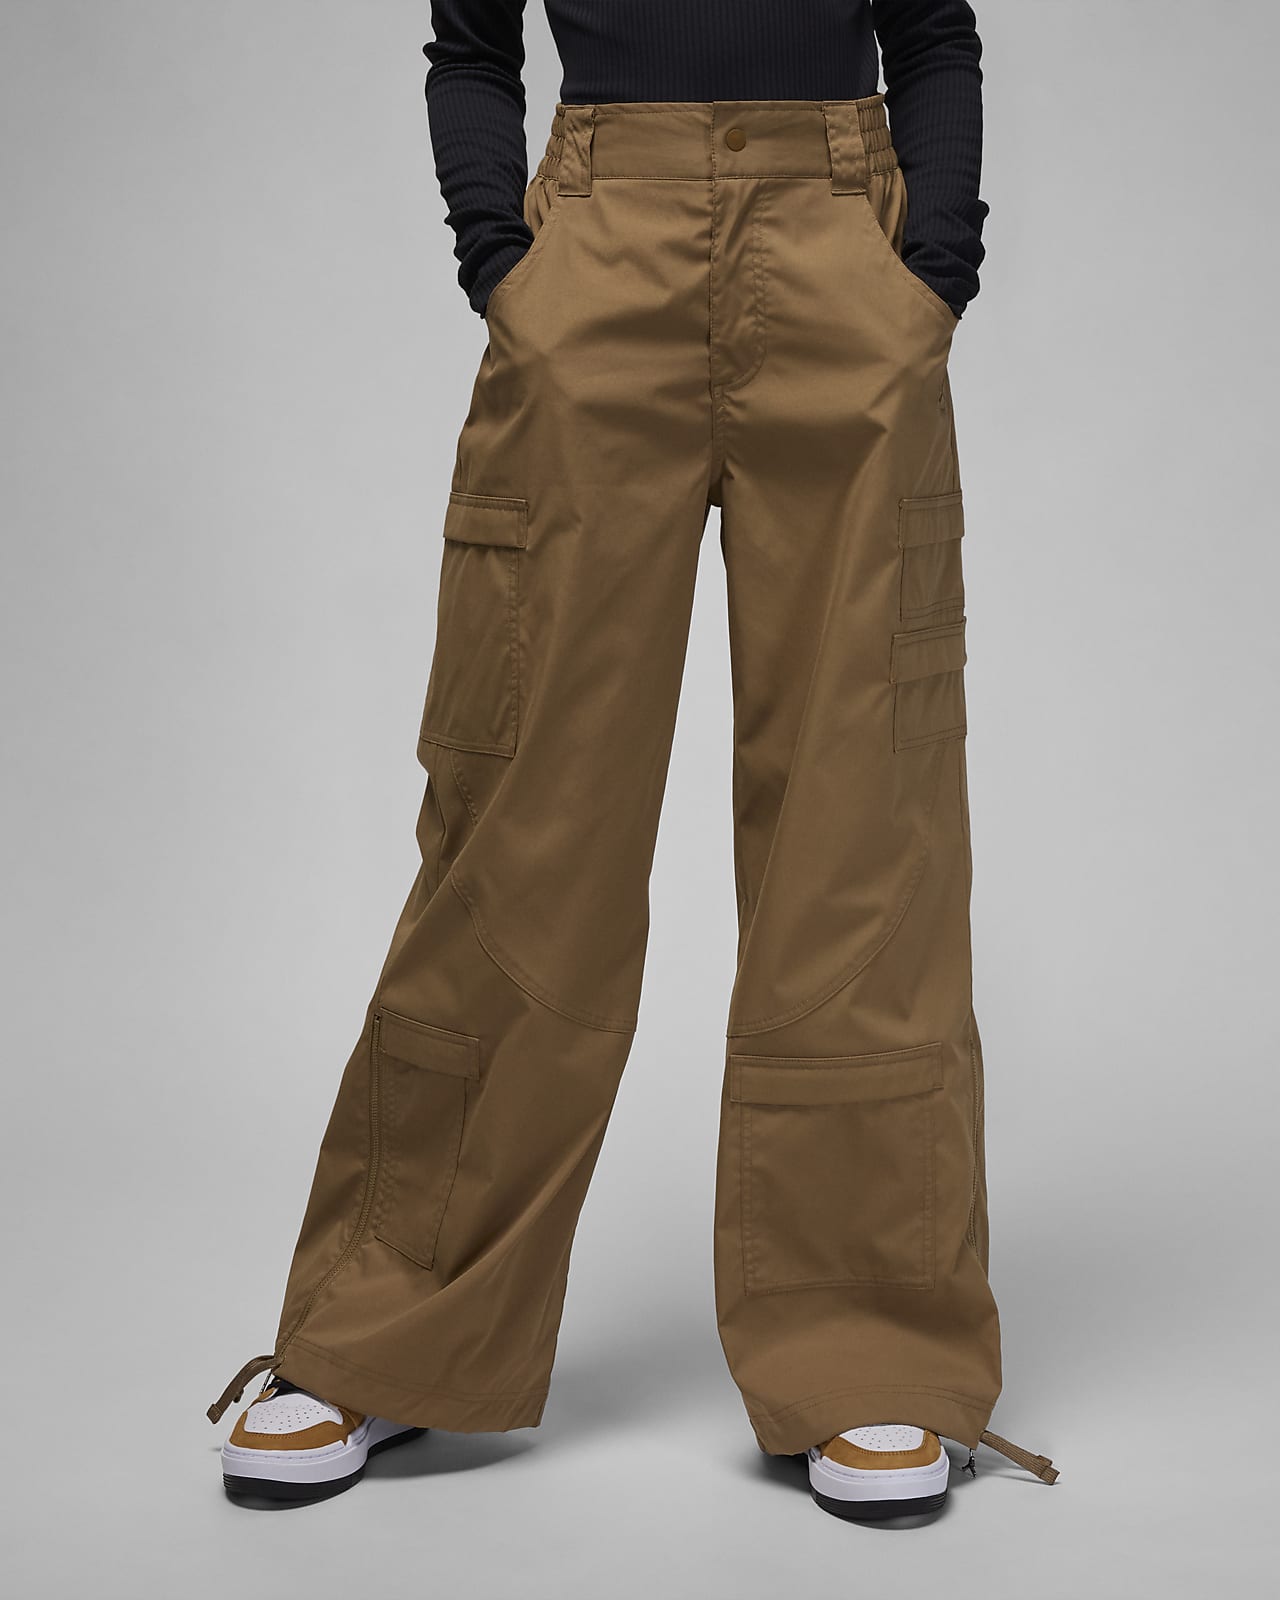 Jordan Chicago Women's Trousers. Nike AU